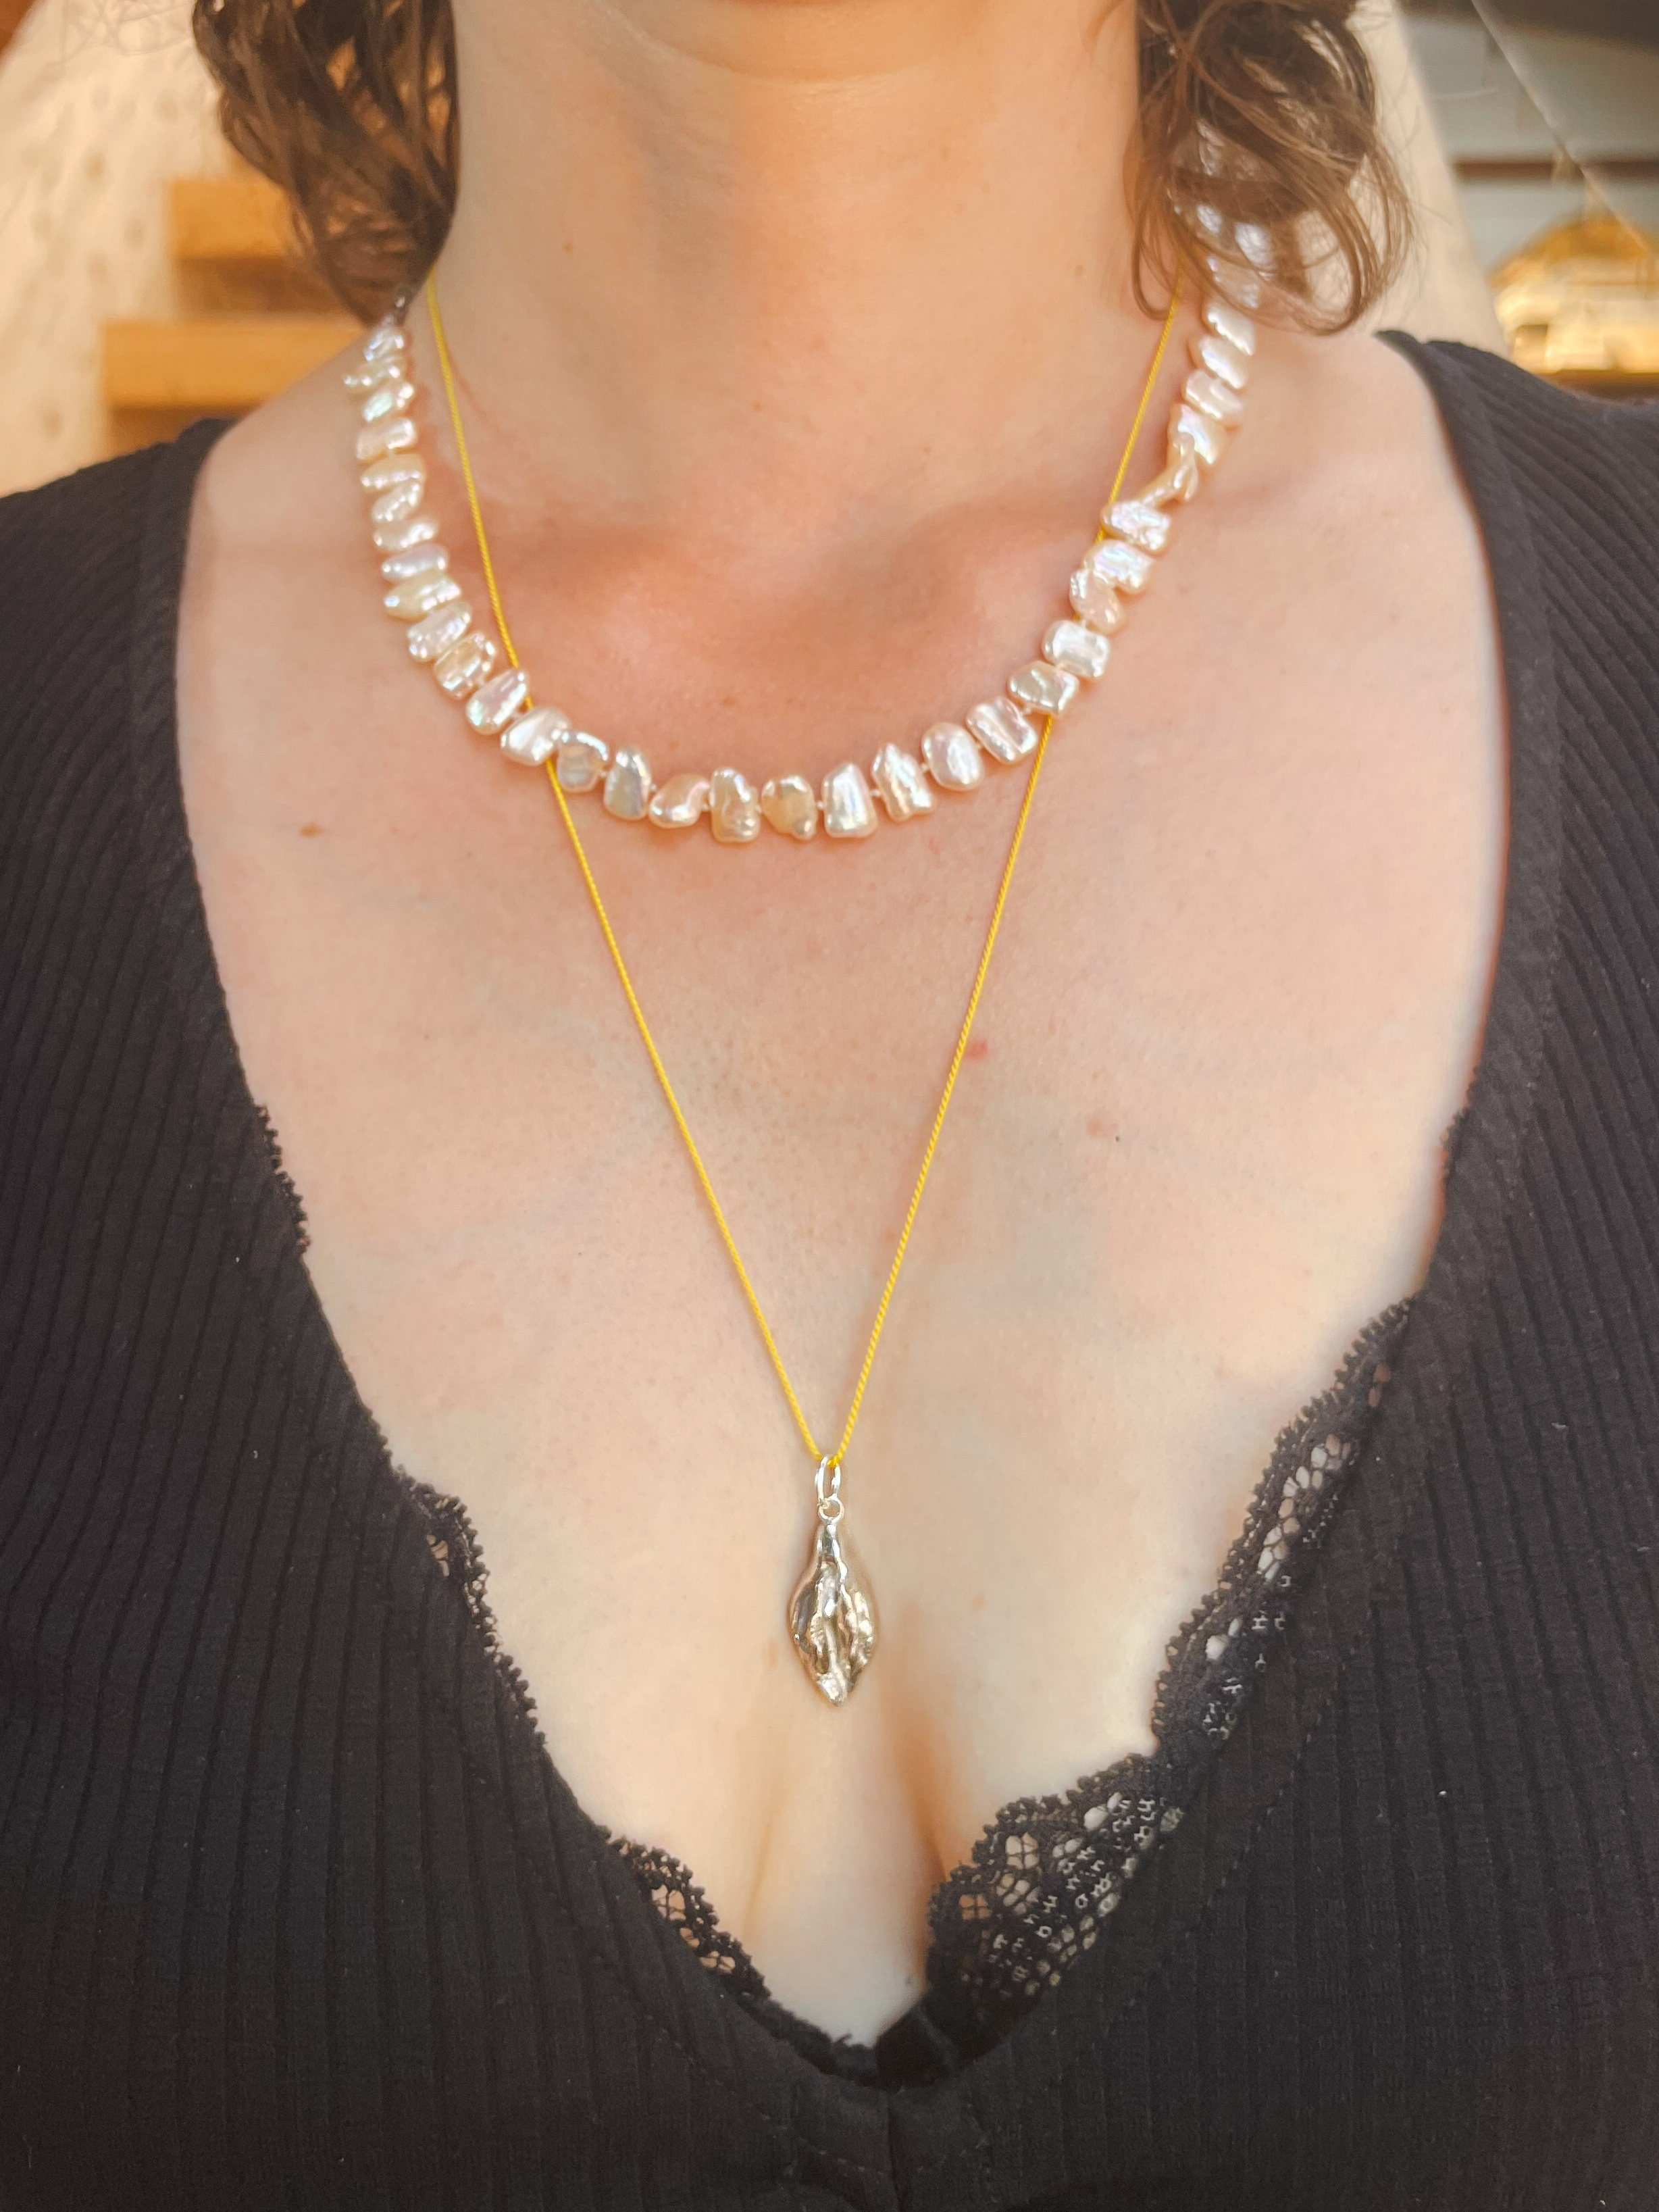 Silver Vulva necklace worn after the workshop